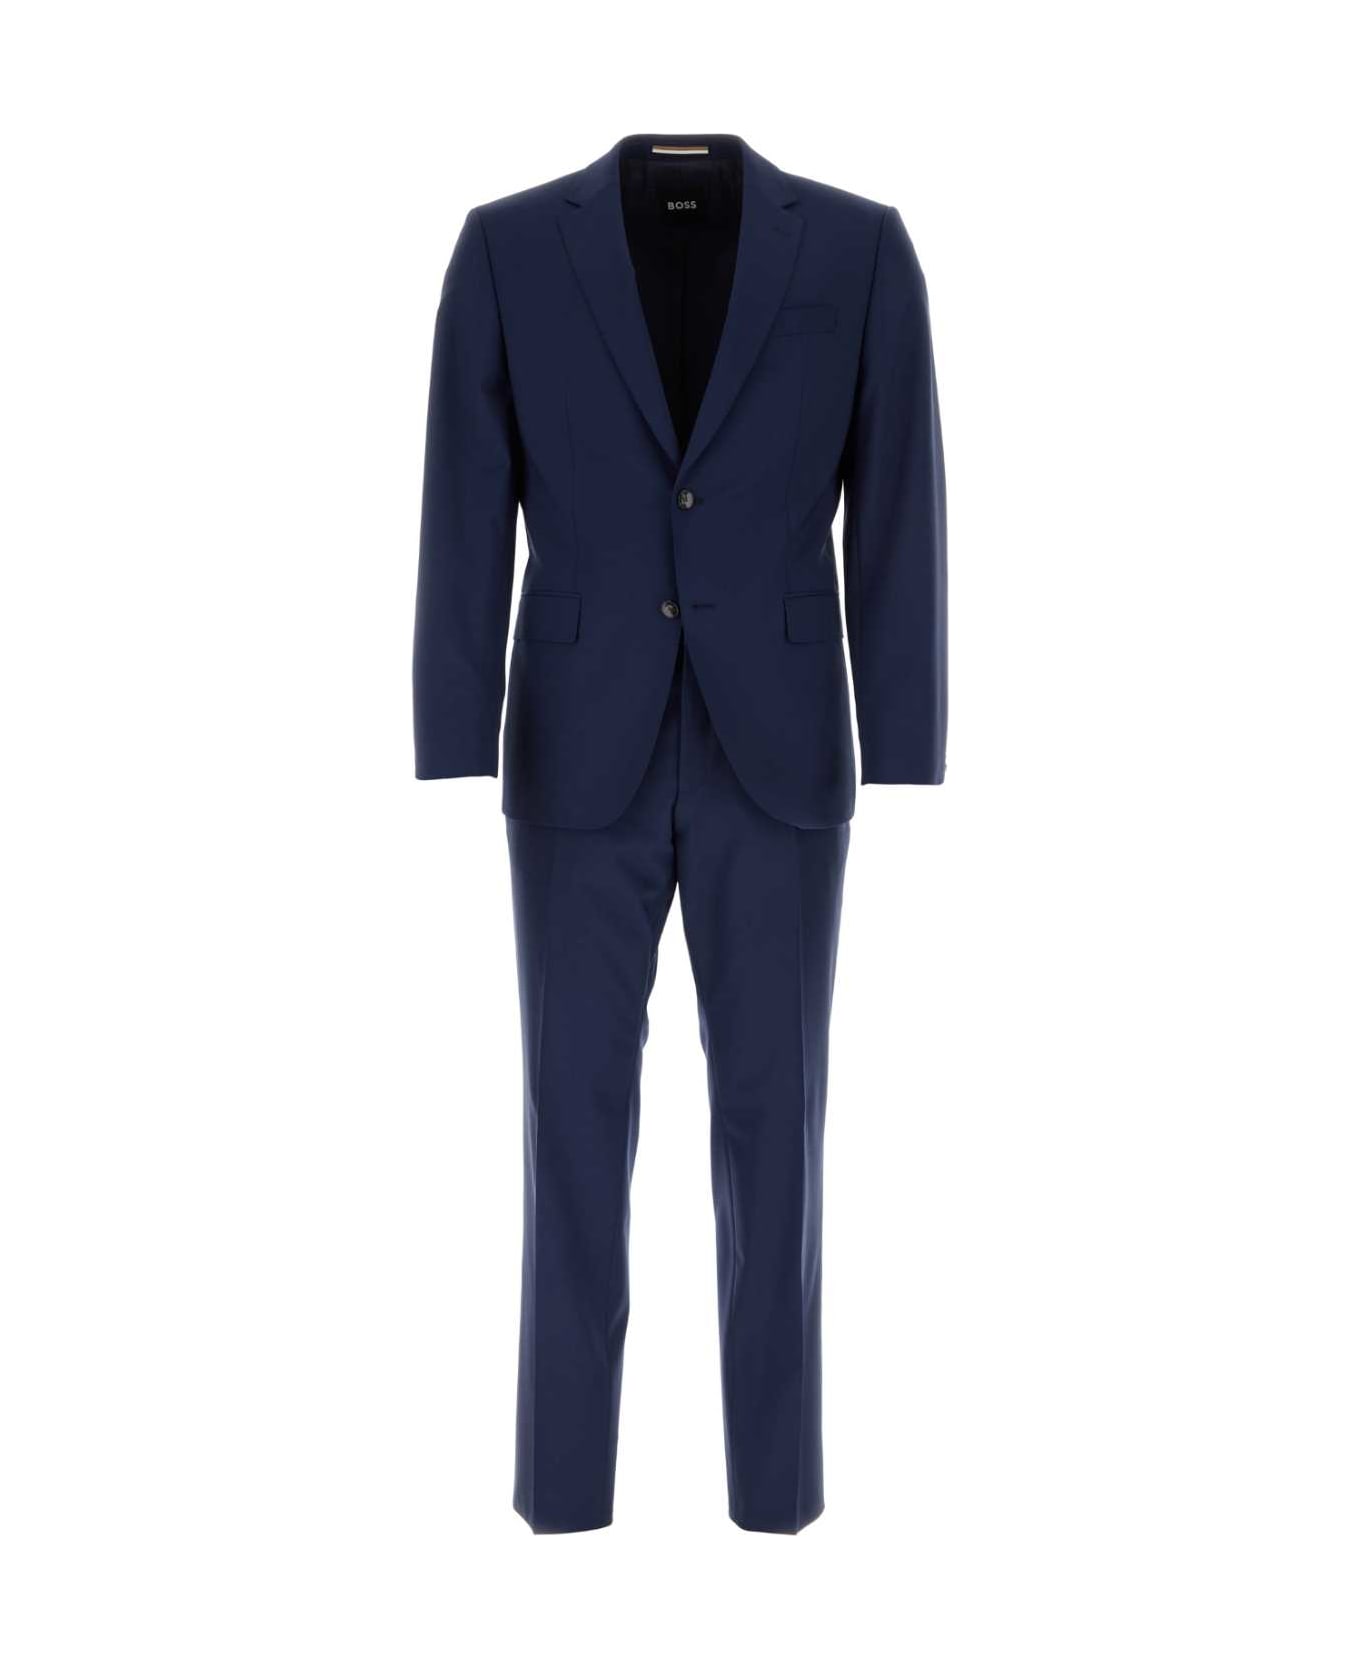 Hugo Boss Blue Stretch Wool Suit - OPENBLUE スーツ